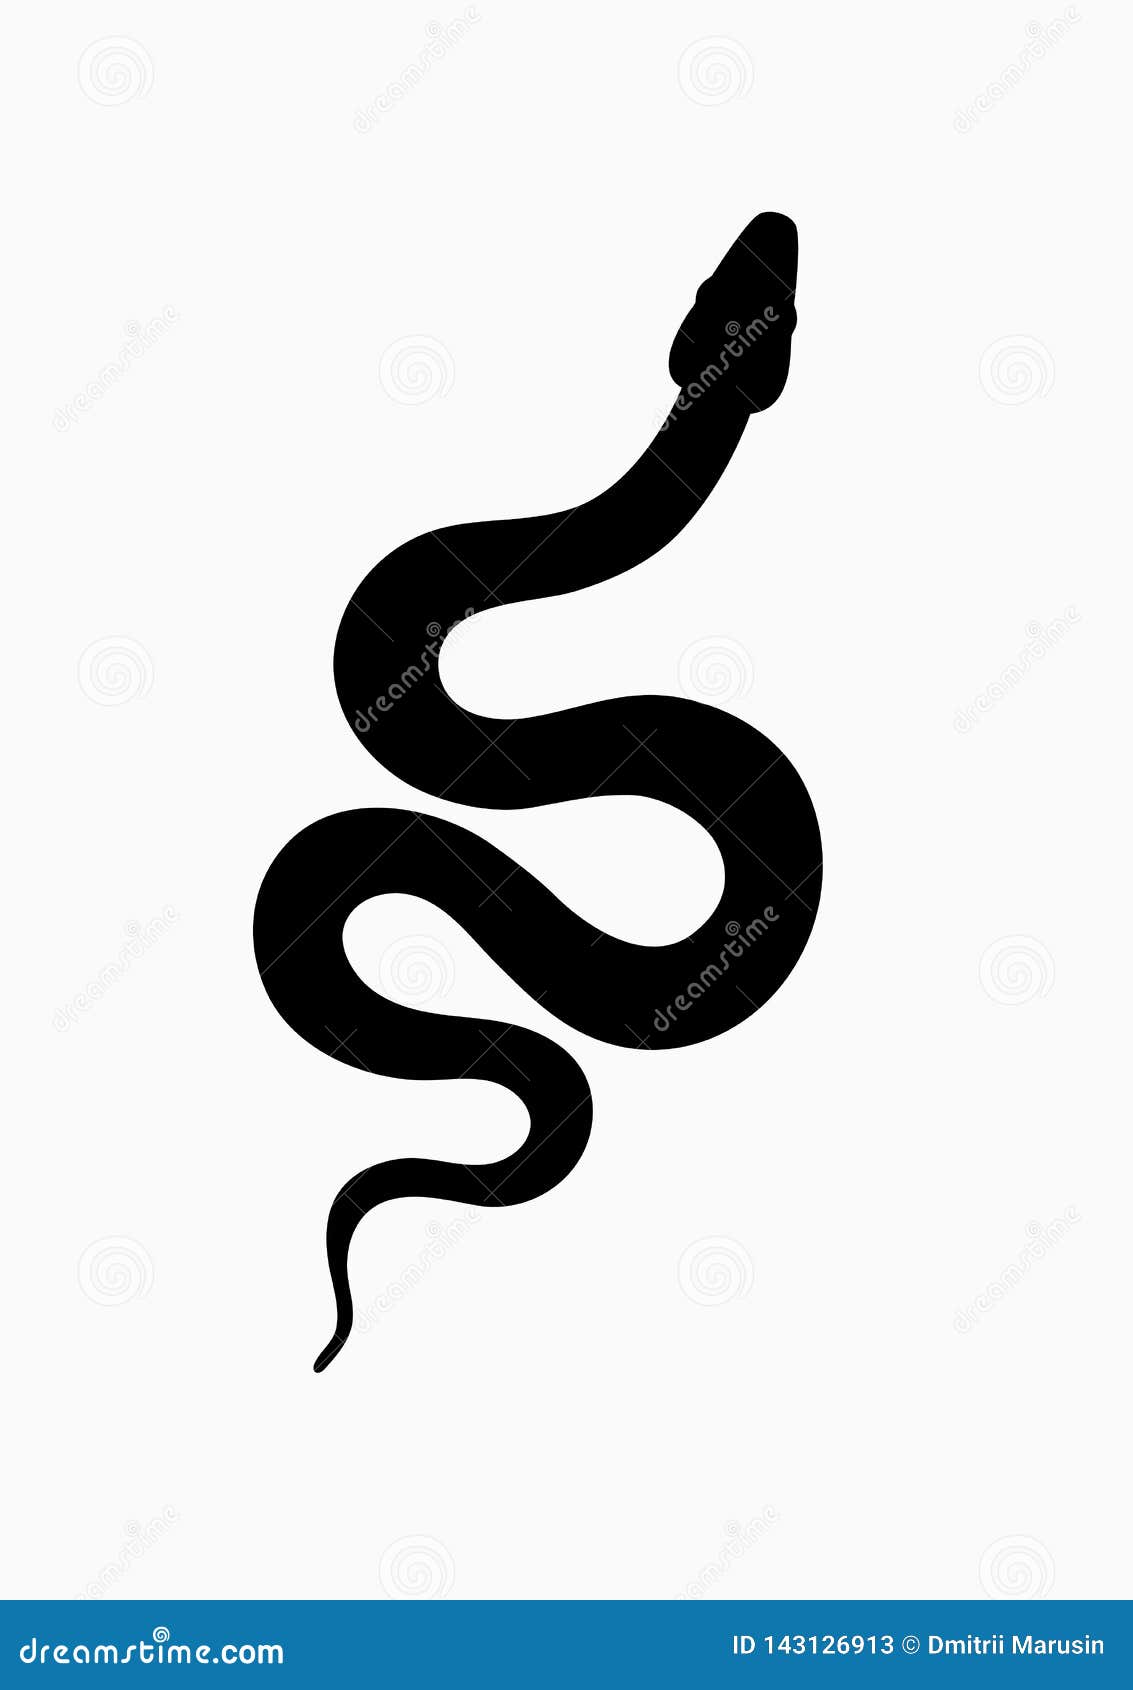 Black Silhouette Snake. Isolated Symbol or Icon Snake on White ...